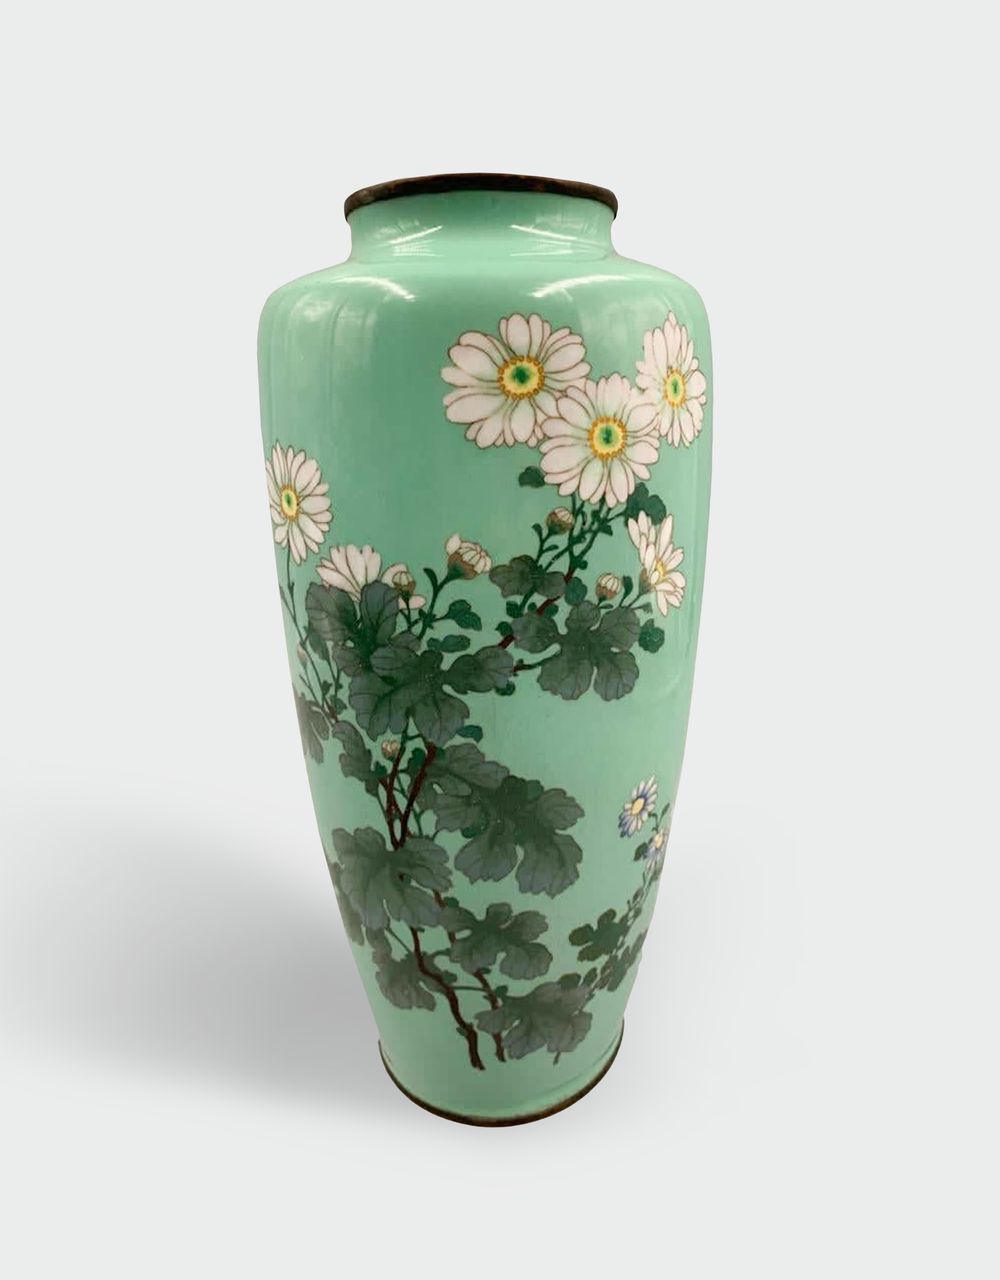 Cloisonne vase with chrisantemum, Hattori Tadasaburo, Japán
Diameter 17cm, Height 30cm, enamel on silver, 1890sDiameter 17cm, Height 30cm, enamel on silver, 1890s